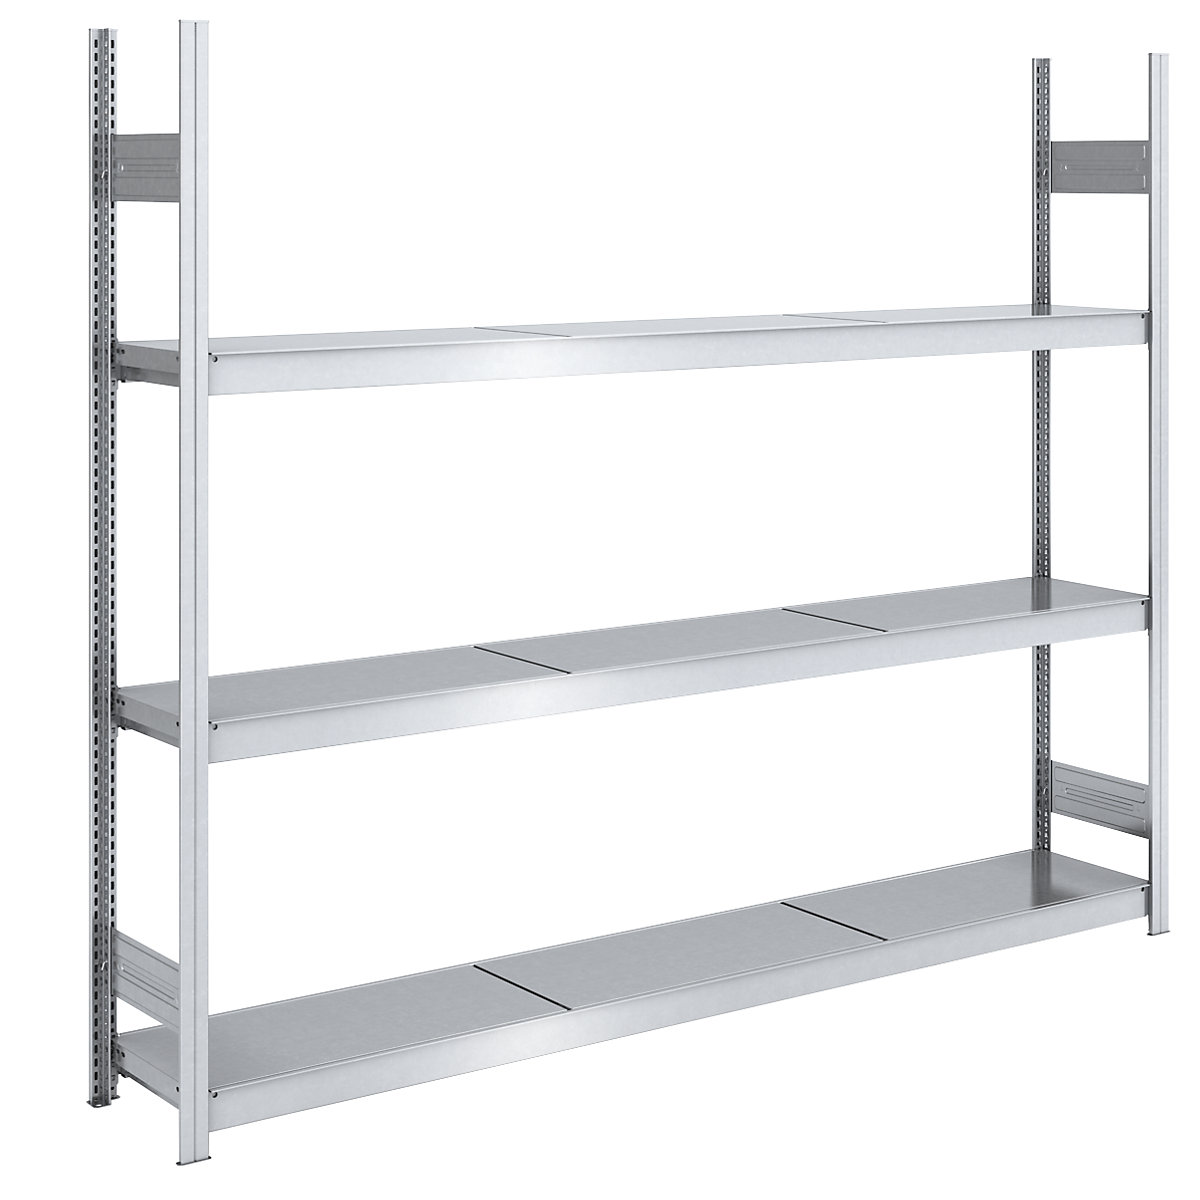 Wide span boltless shelving unit, zinc plated – hofe, shelf WxD 2250 x 400 mm, standard shelf unit, 3 steel shelves, height 2000 mm